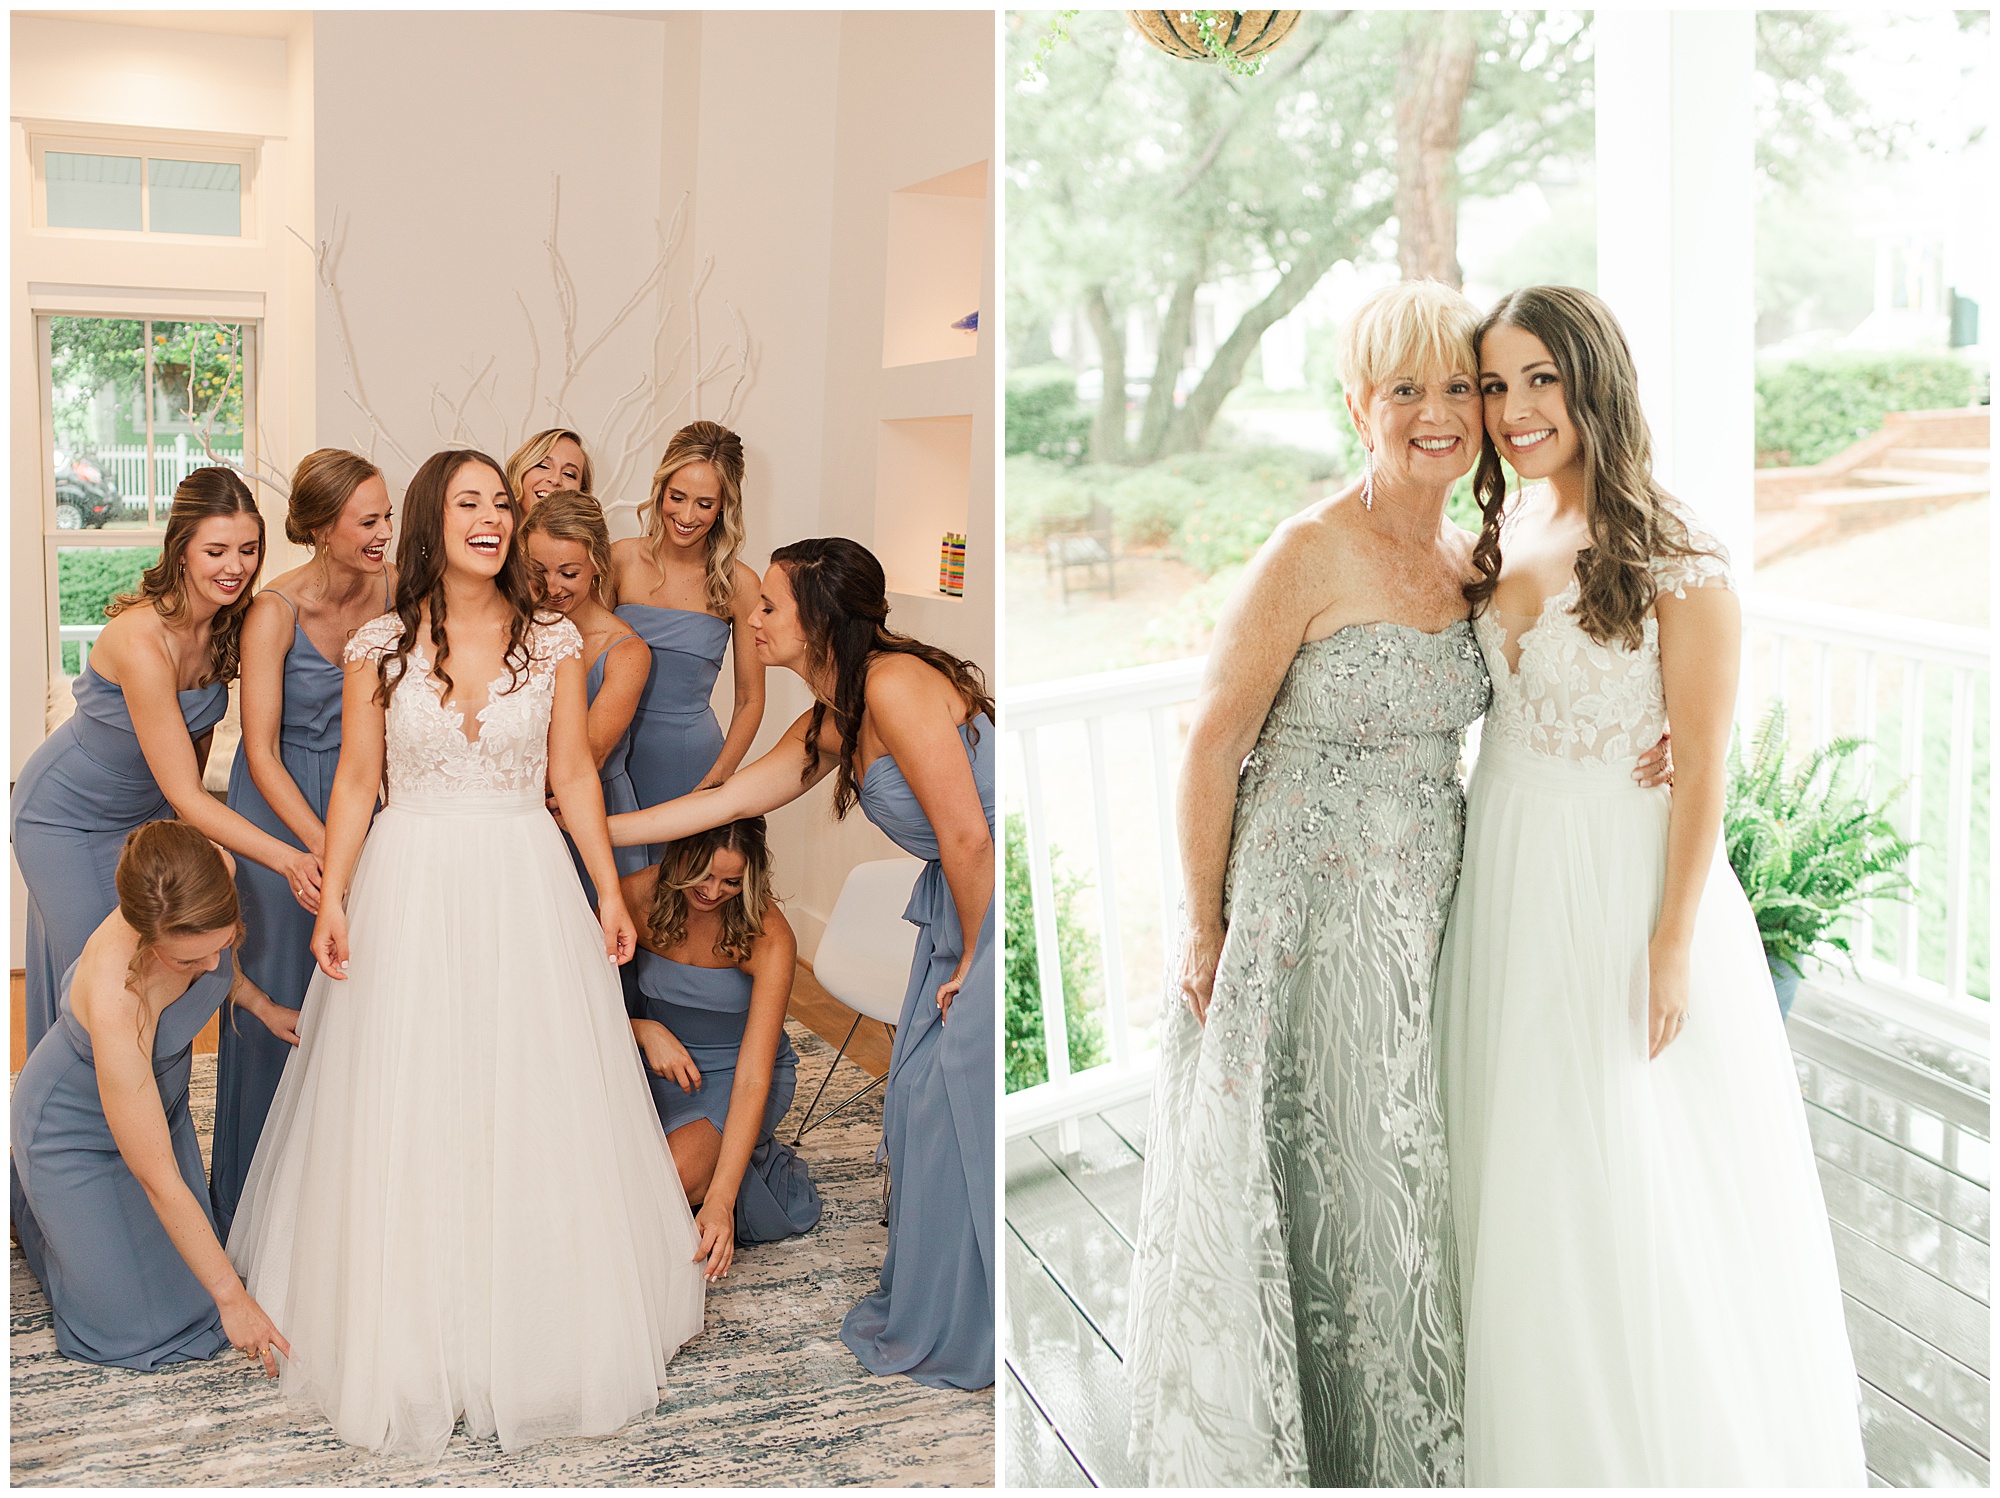 Danielle & Chris, East Beach wedding, Hampton Roads weddings, Kelley Stinson Photography, bride getting ready, cornflower blue bridesmaids